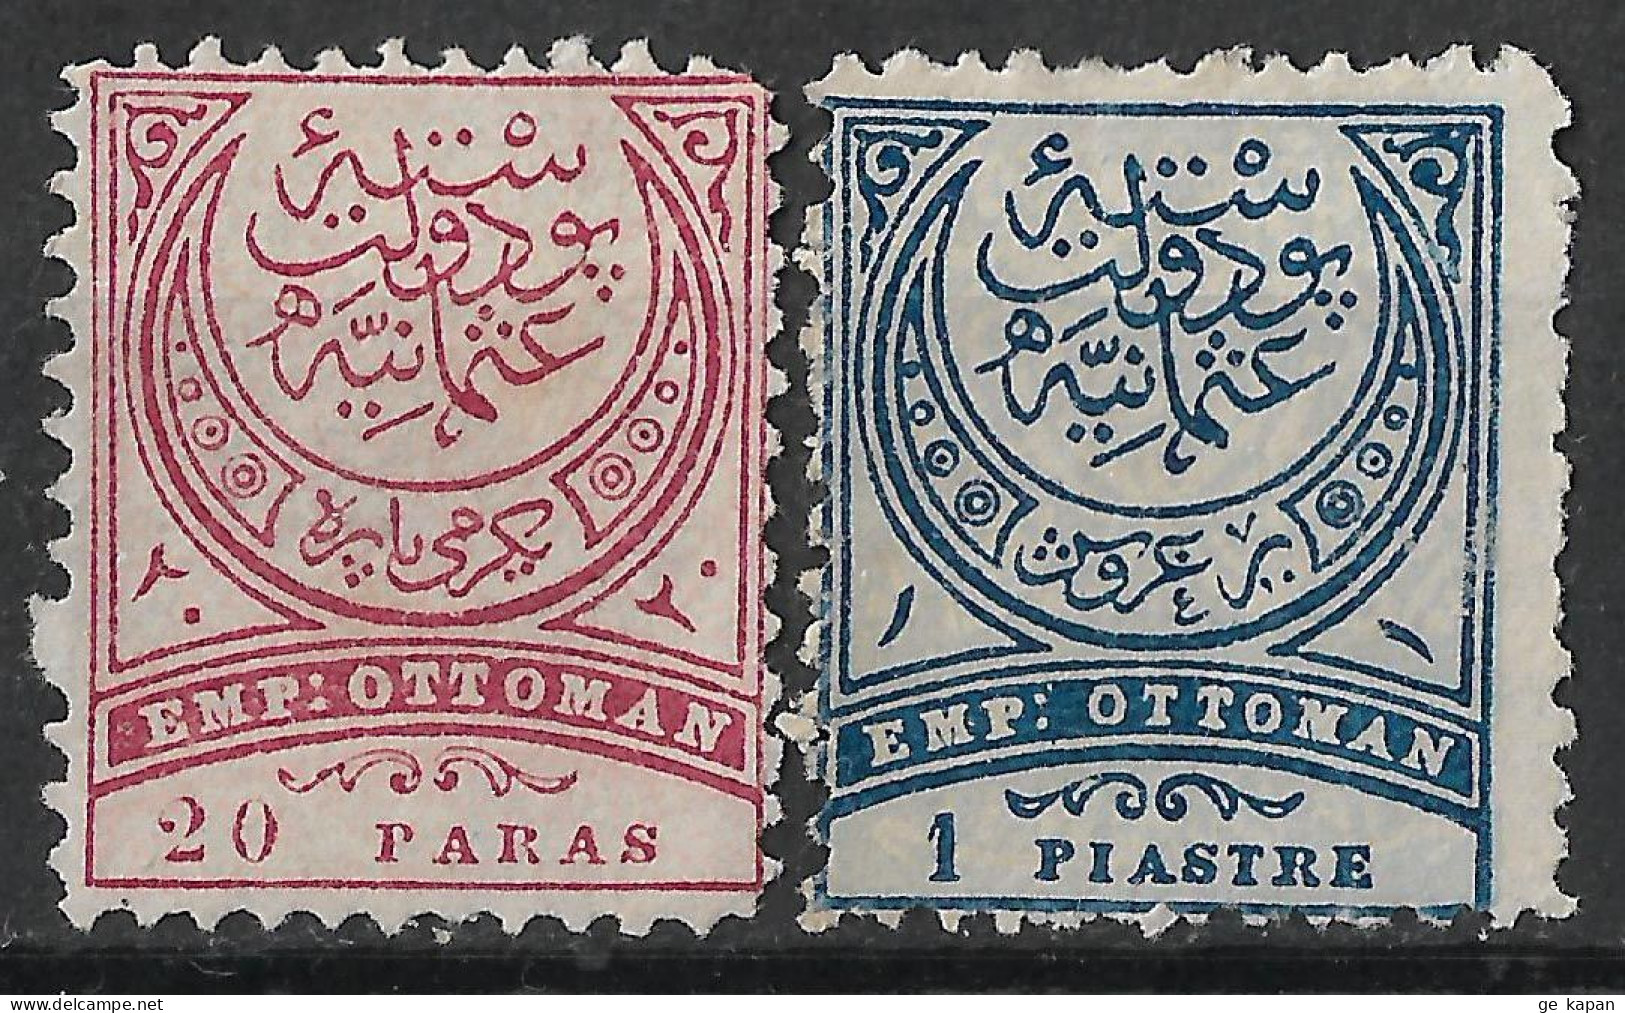 1890 TURKEY Set Of 2 Unused Stamps (Michel # 60B,61aB) CV €16.00 - Neufs